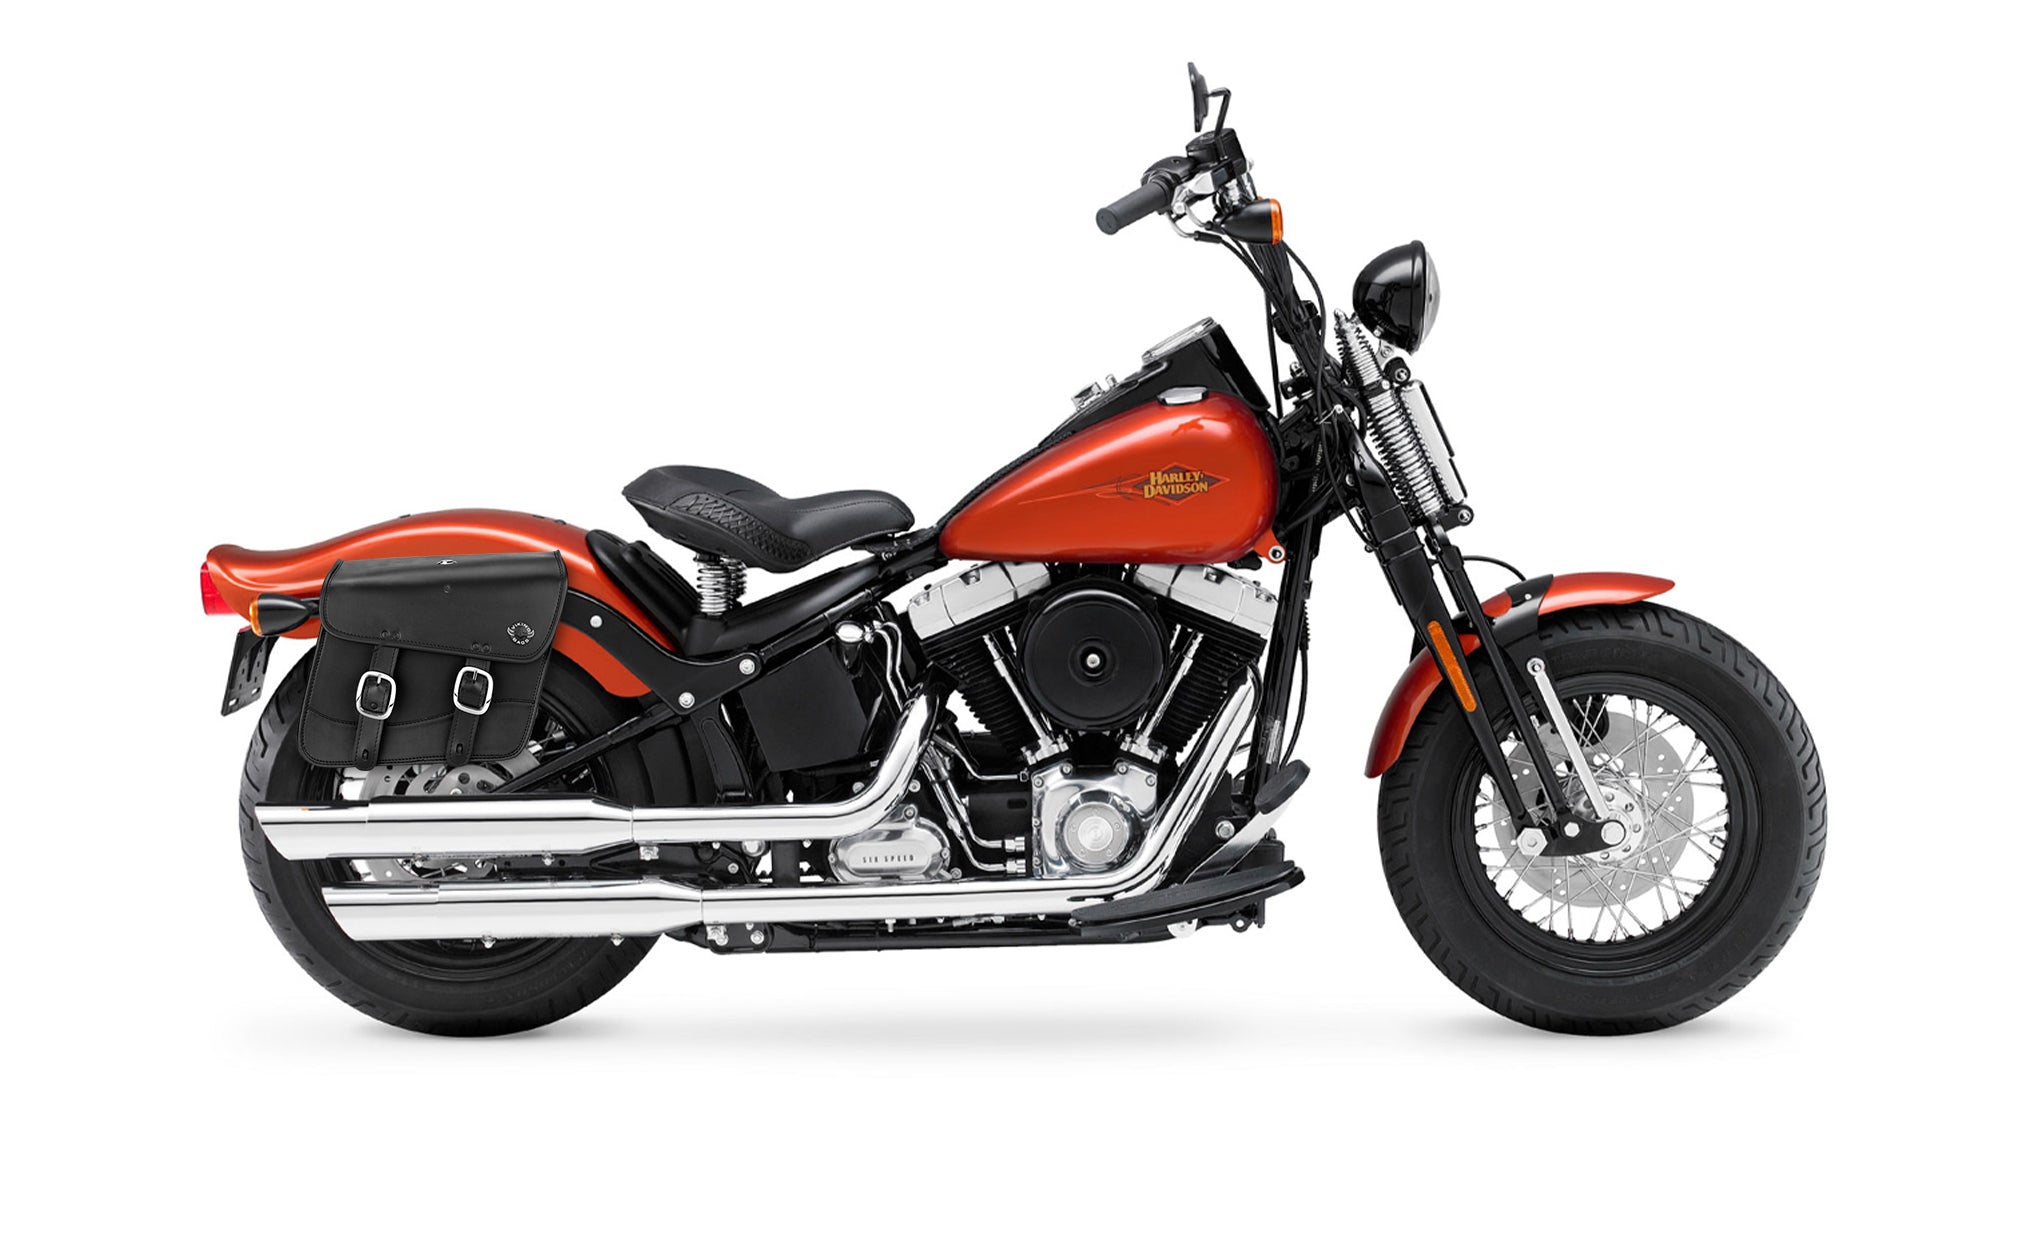 Viking Thor Medium Leather Motorcycle Saddlebags For Harley Davidson Softail Cross Bones Flstsb on Bike Photo @expand